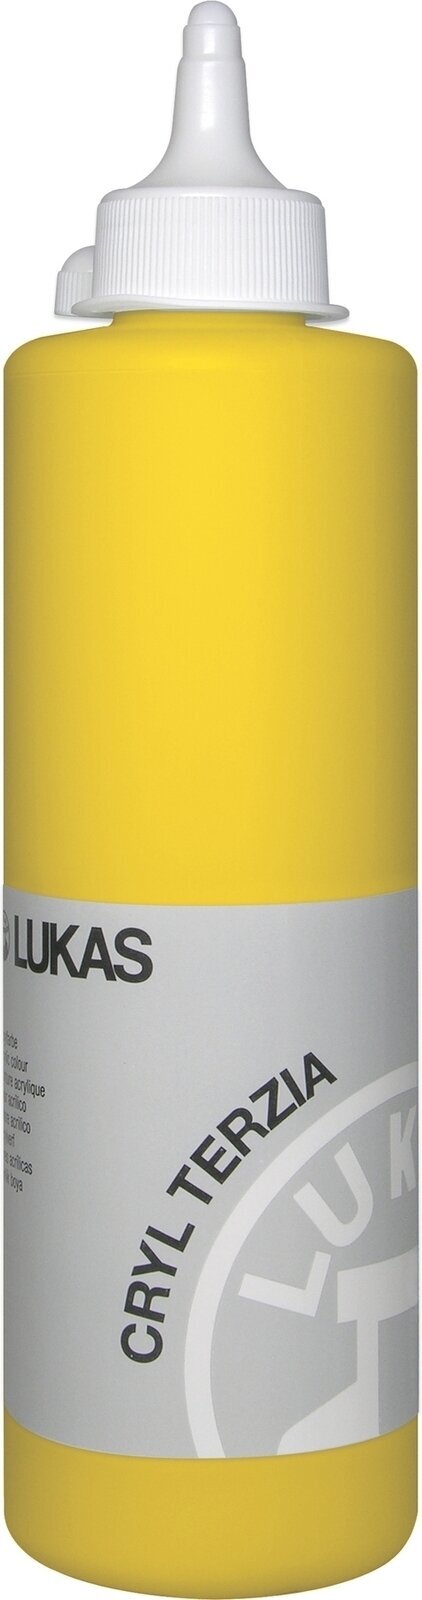 Acrylic Paint Lukas Cryl Terzia Acrylic Paint Plastic Bottle Acrylic Paint Cadmium Yellow Light Hue 500 ml 1 pc